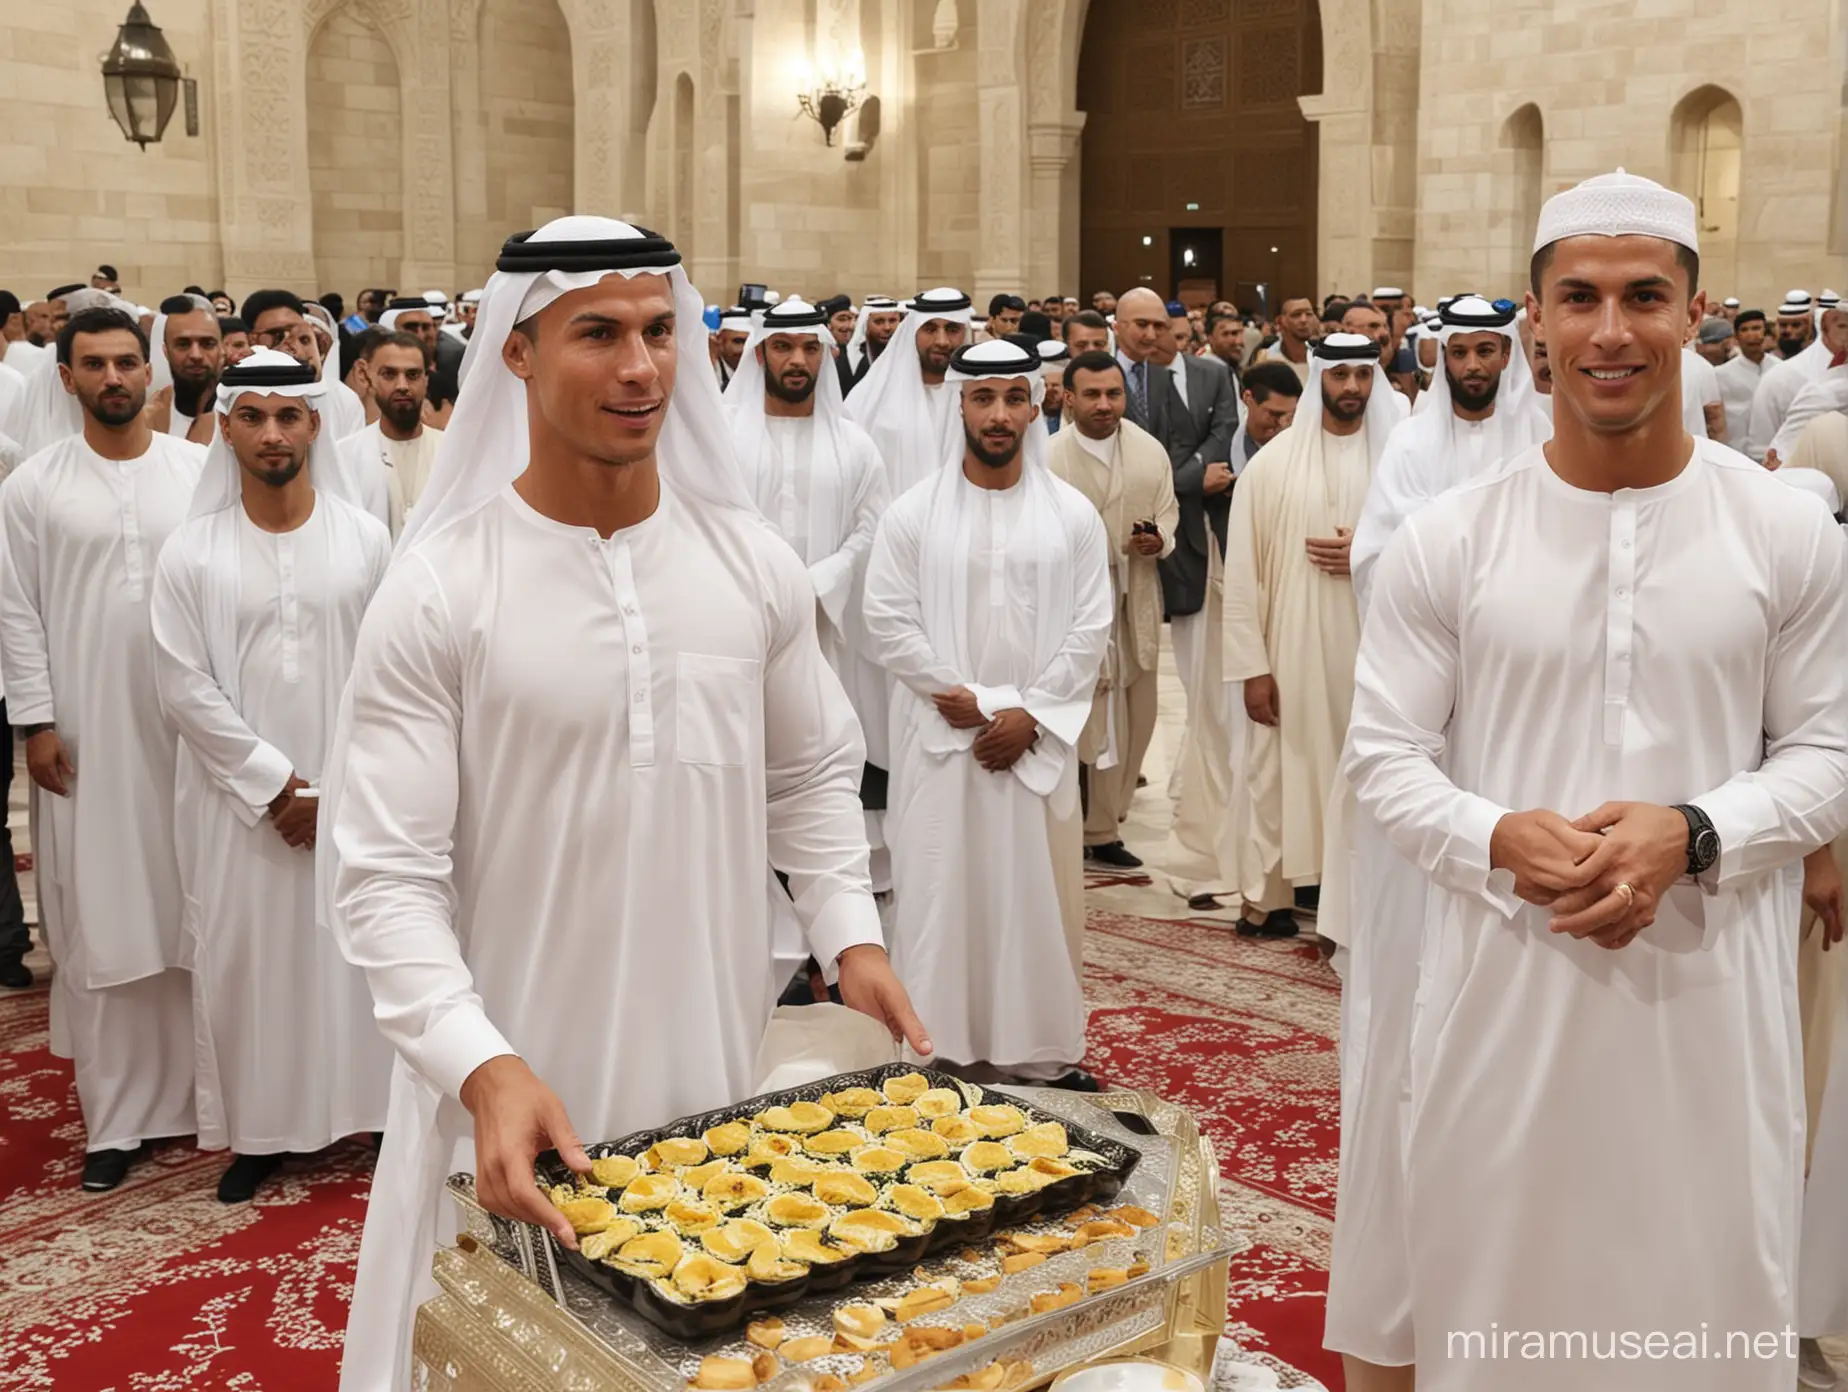 Cristiano Ronaldo's presence at the iftar ceremony of the holy month of Ramadan in Masjid al-Nabi